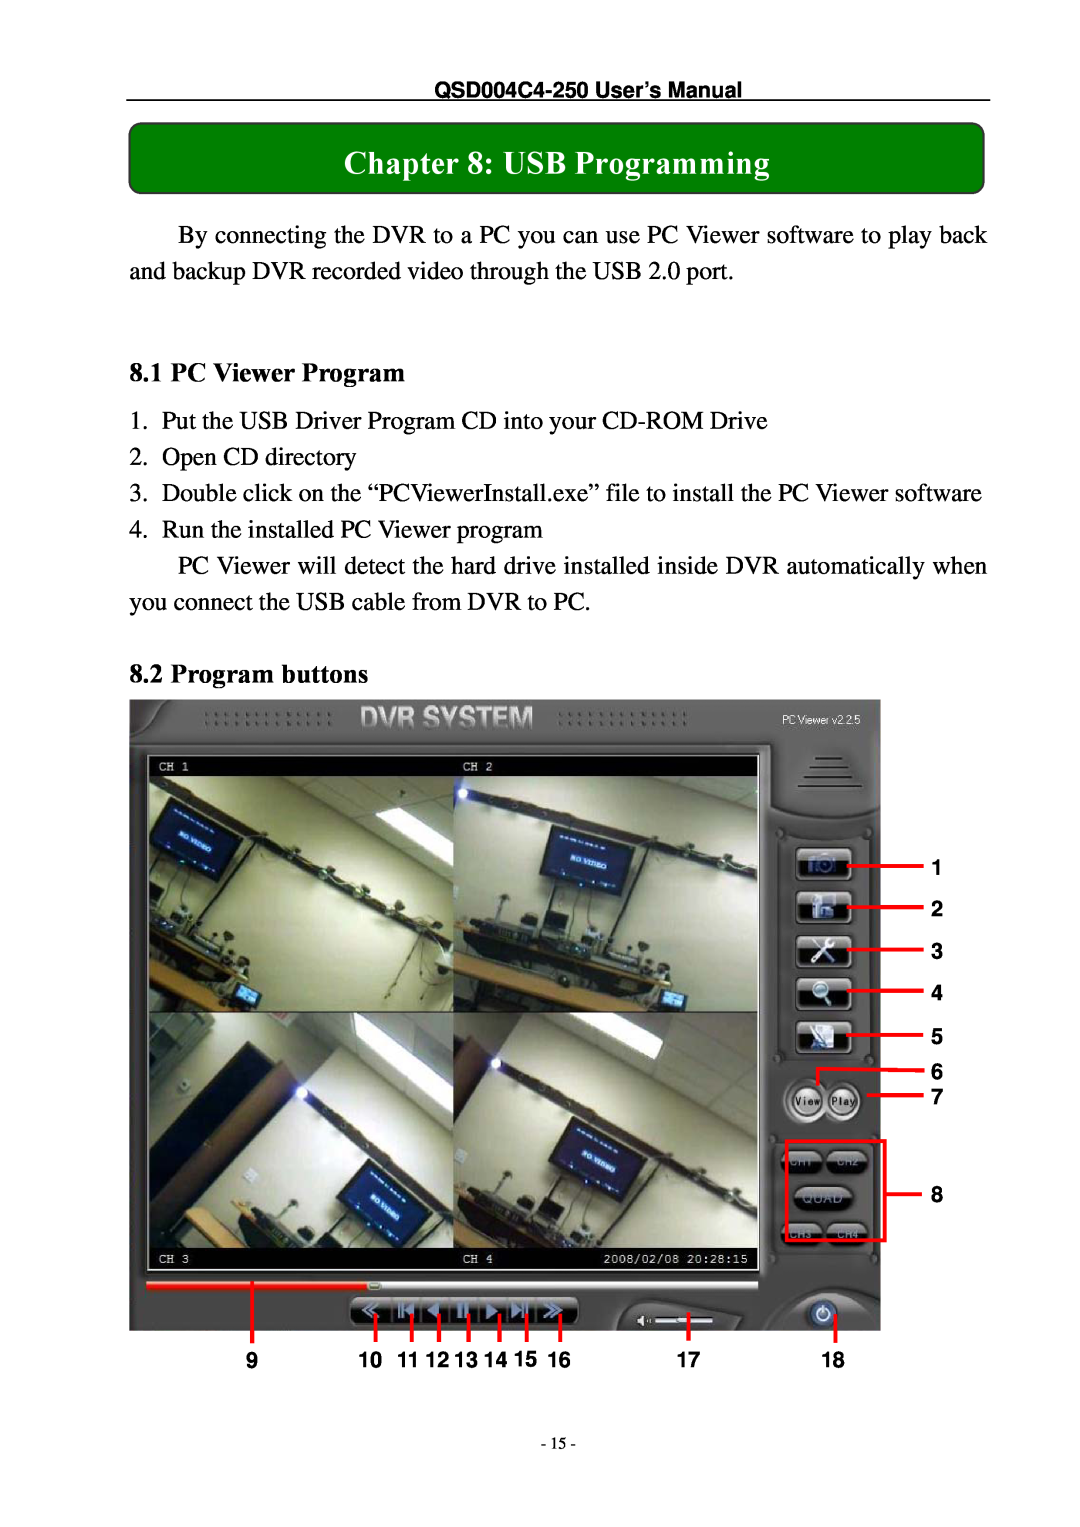 Q-See QSD004C4-250 manual USB Programming, PC Viewer Program, Program buttons 